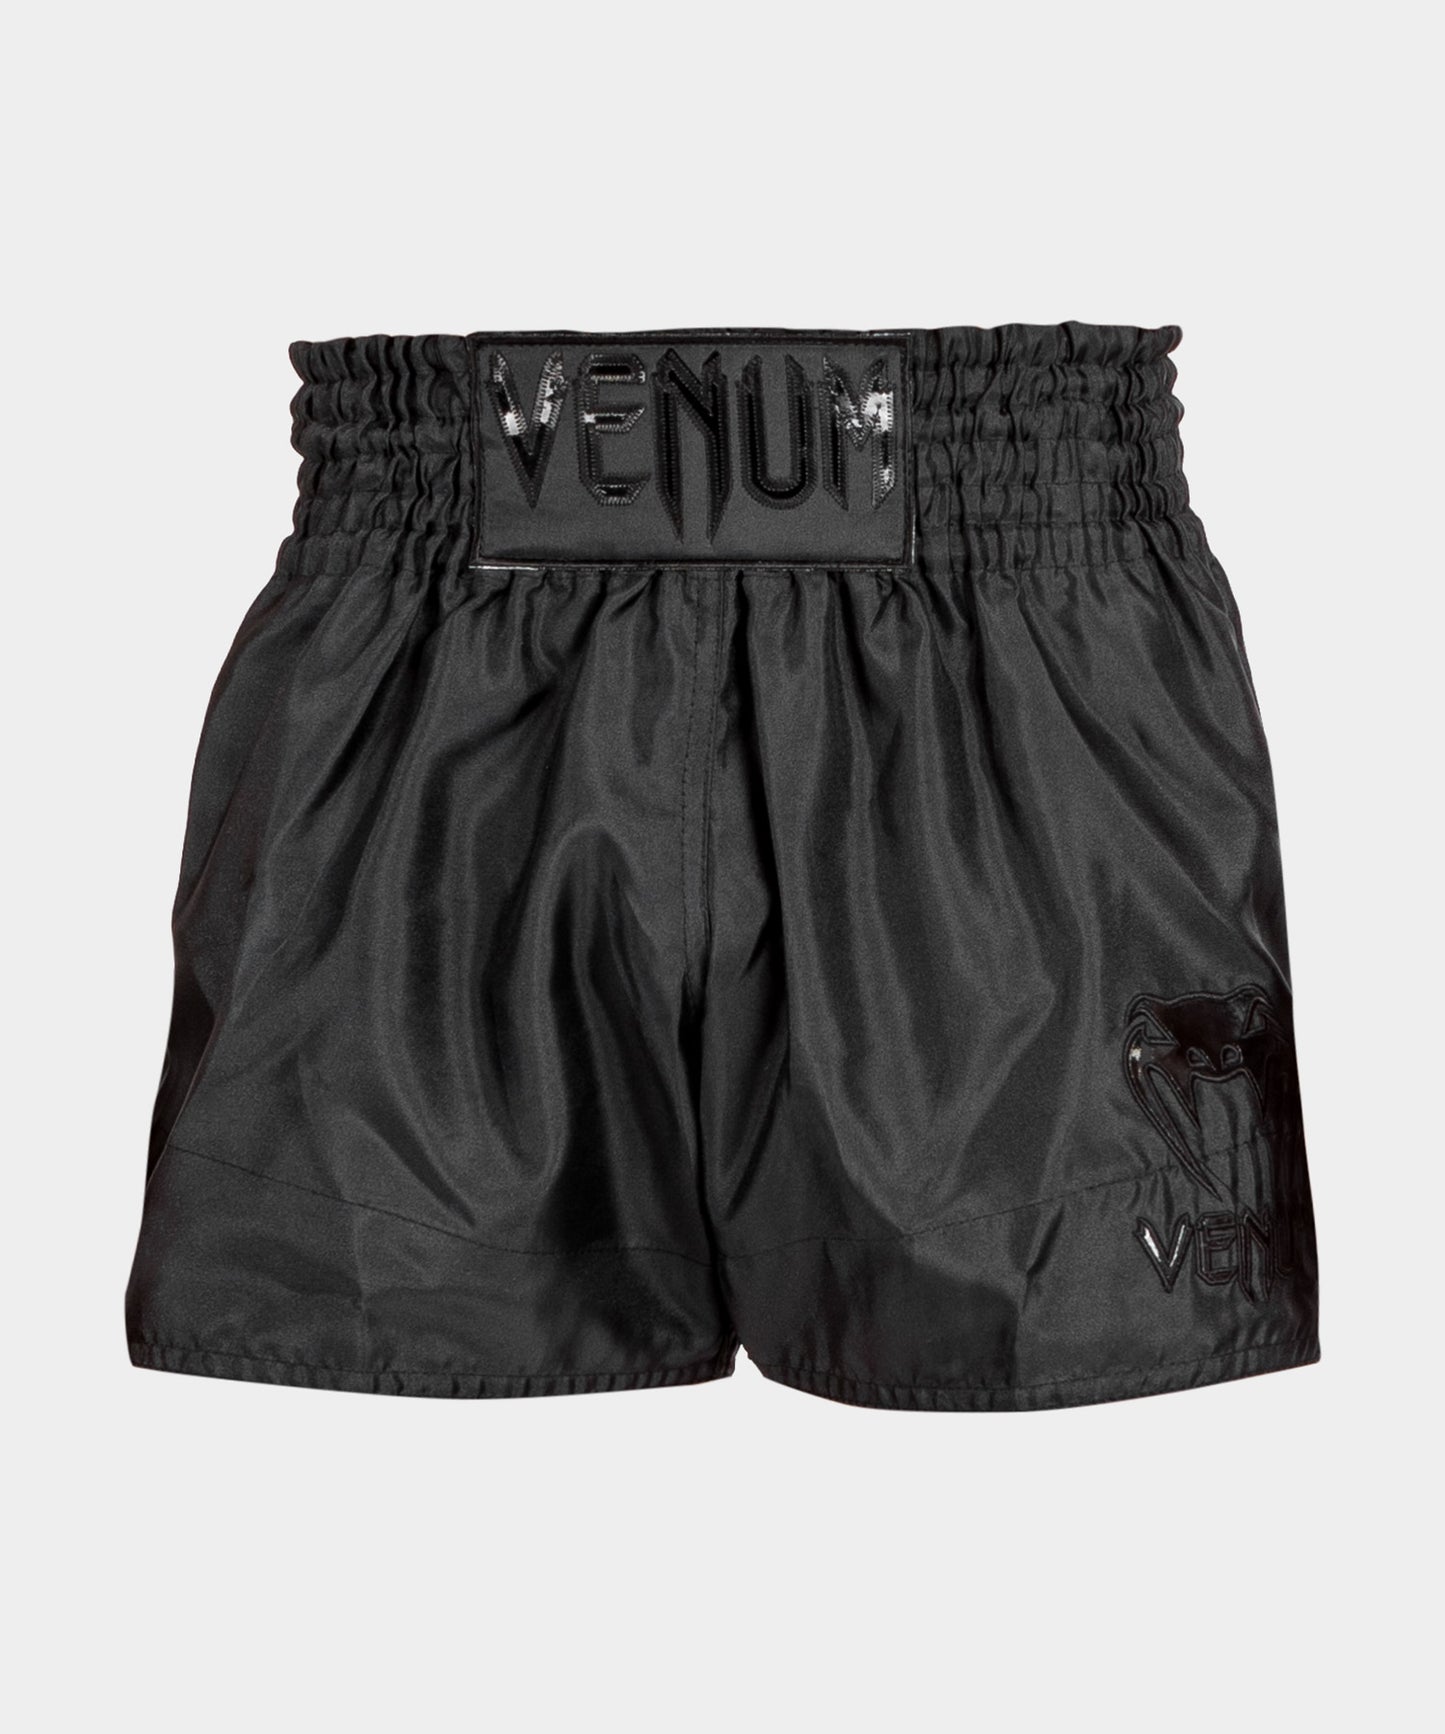 Venum Classic Muay Thai Shorts - Black/Black